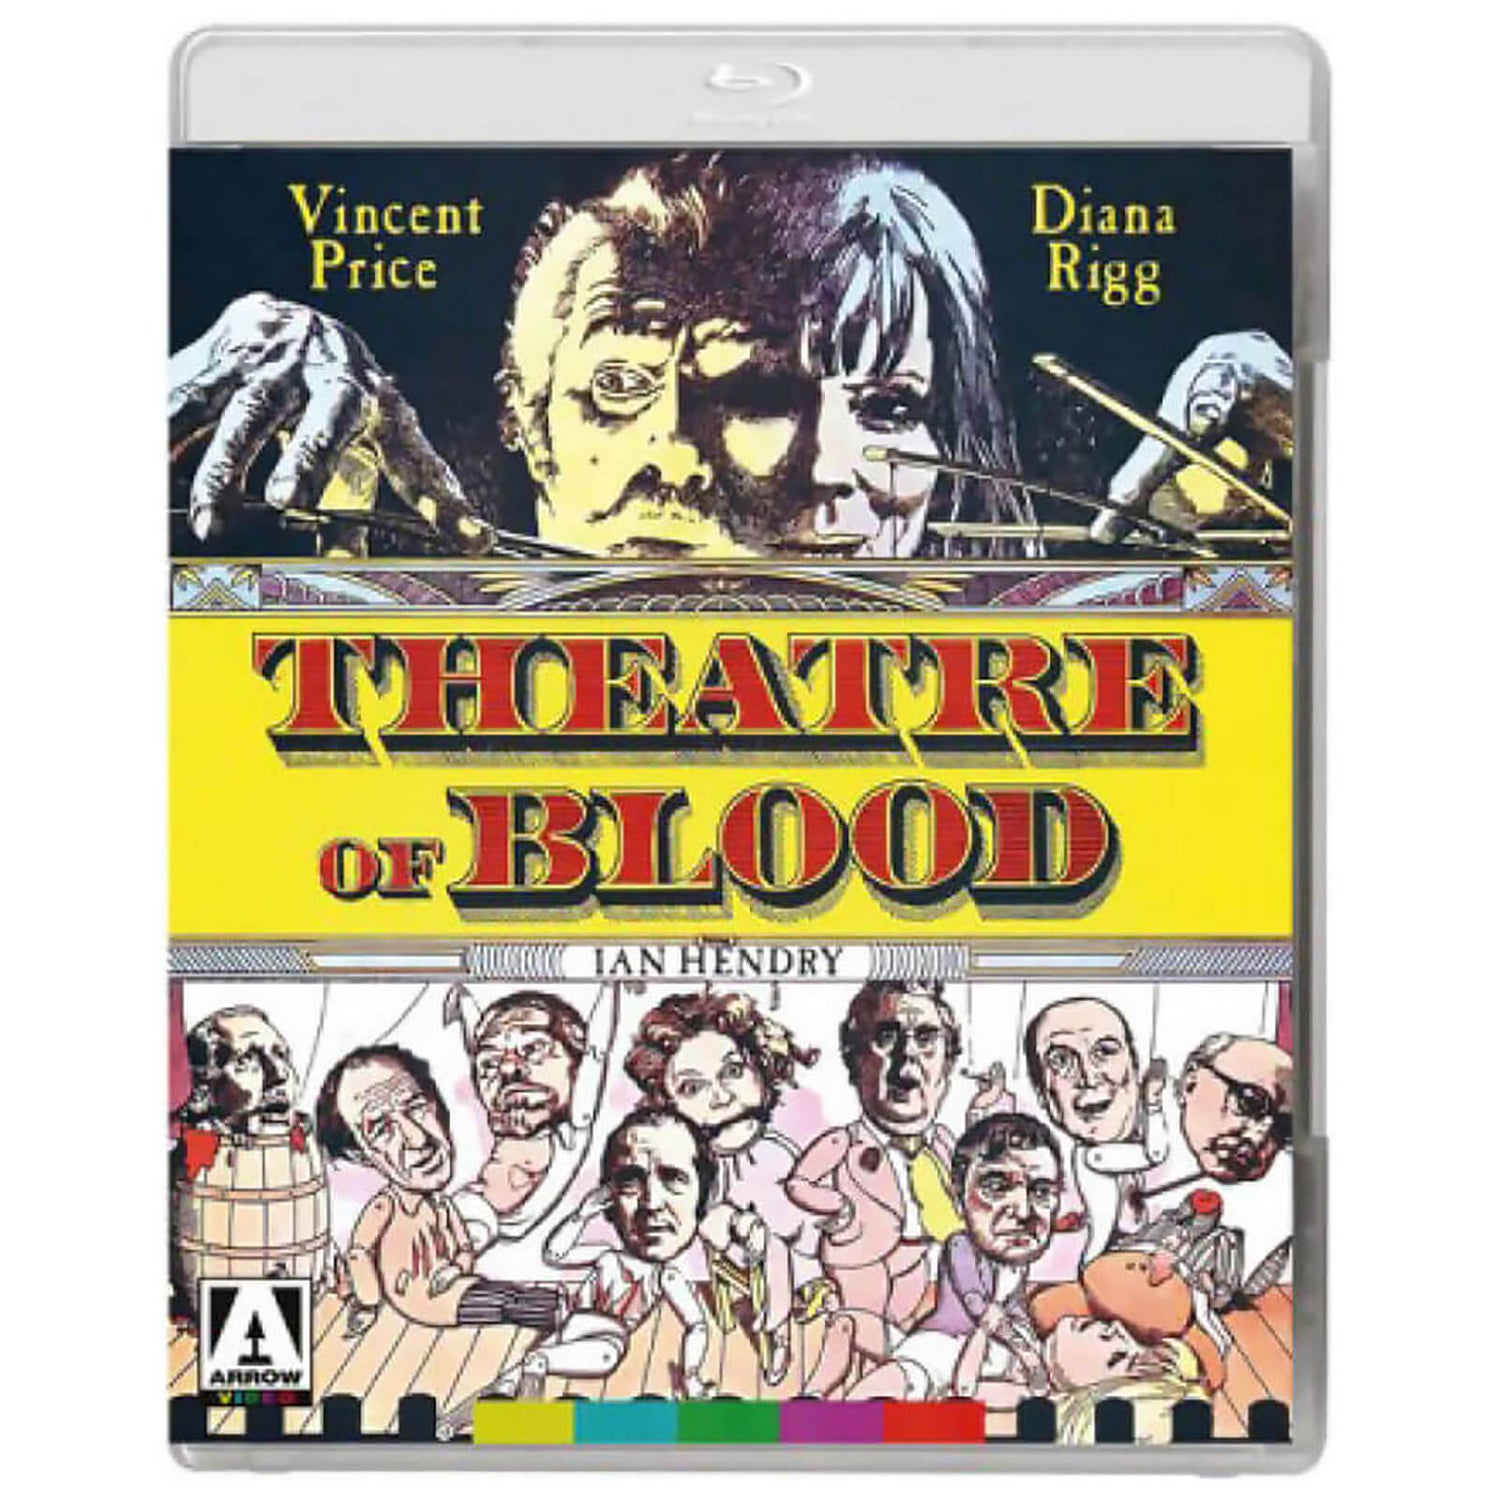 Theatre Of Blood Blu-ray